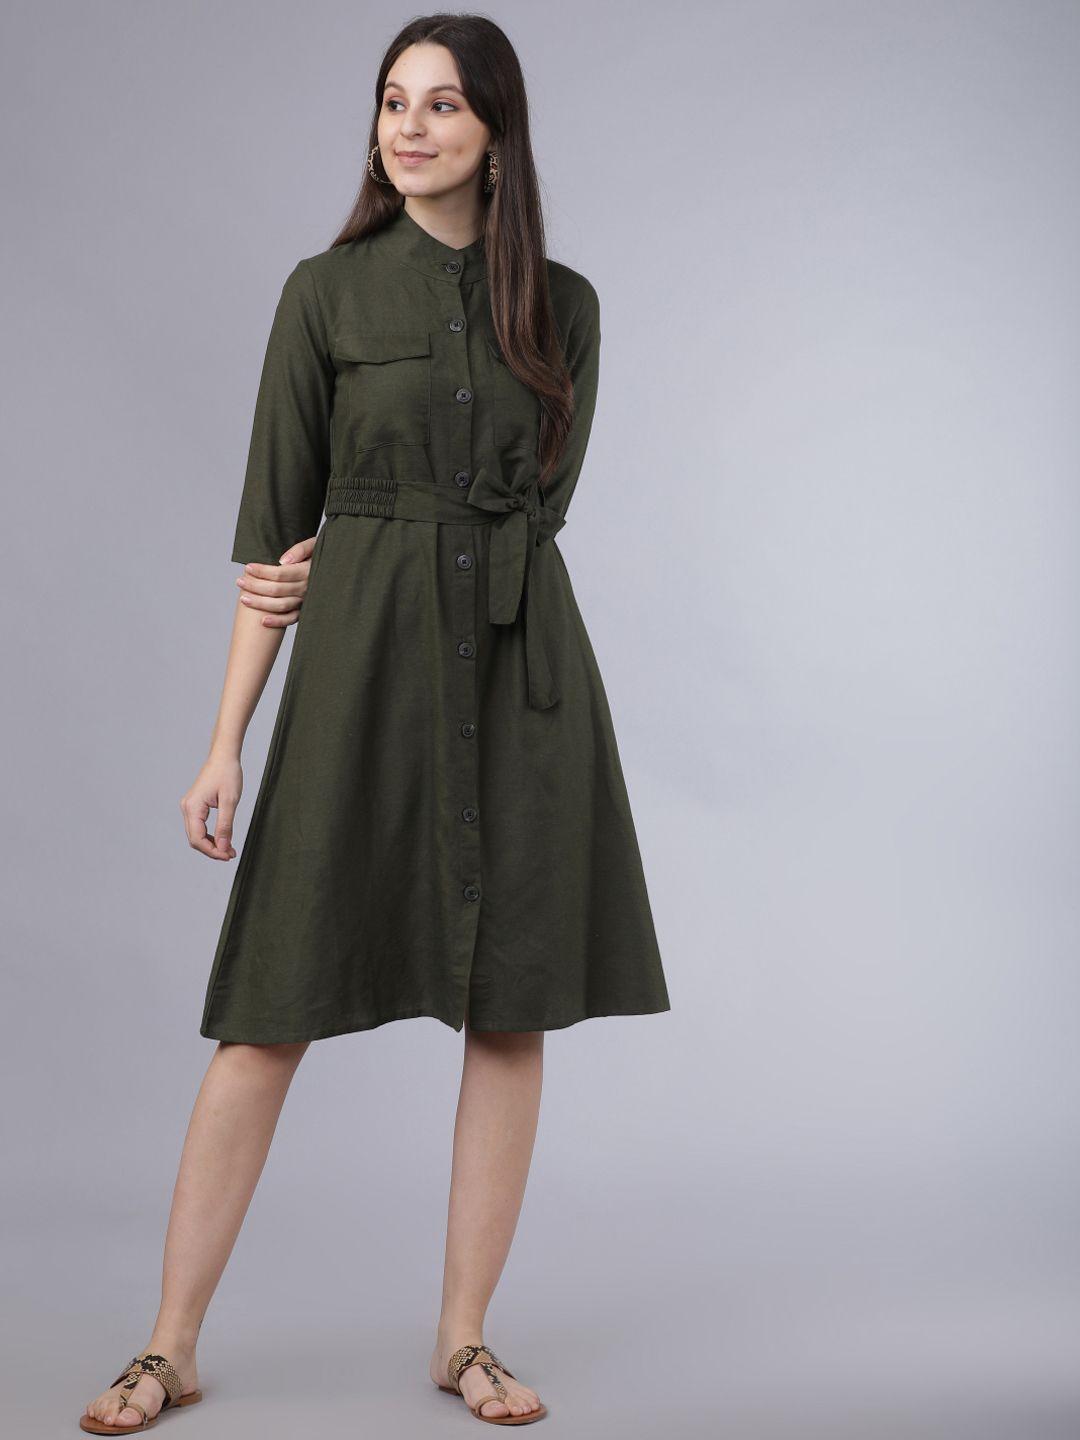 tokyo talkies women olive green solid a-line dress